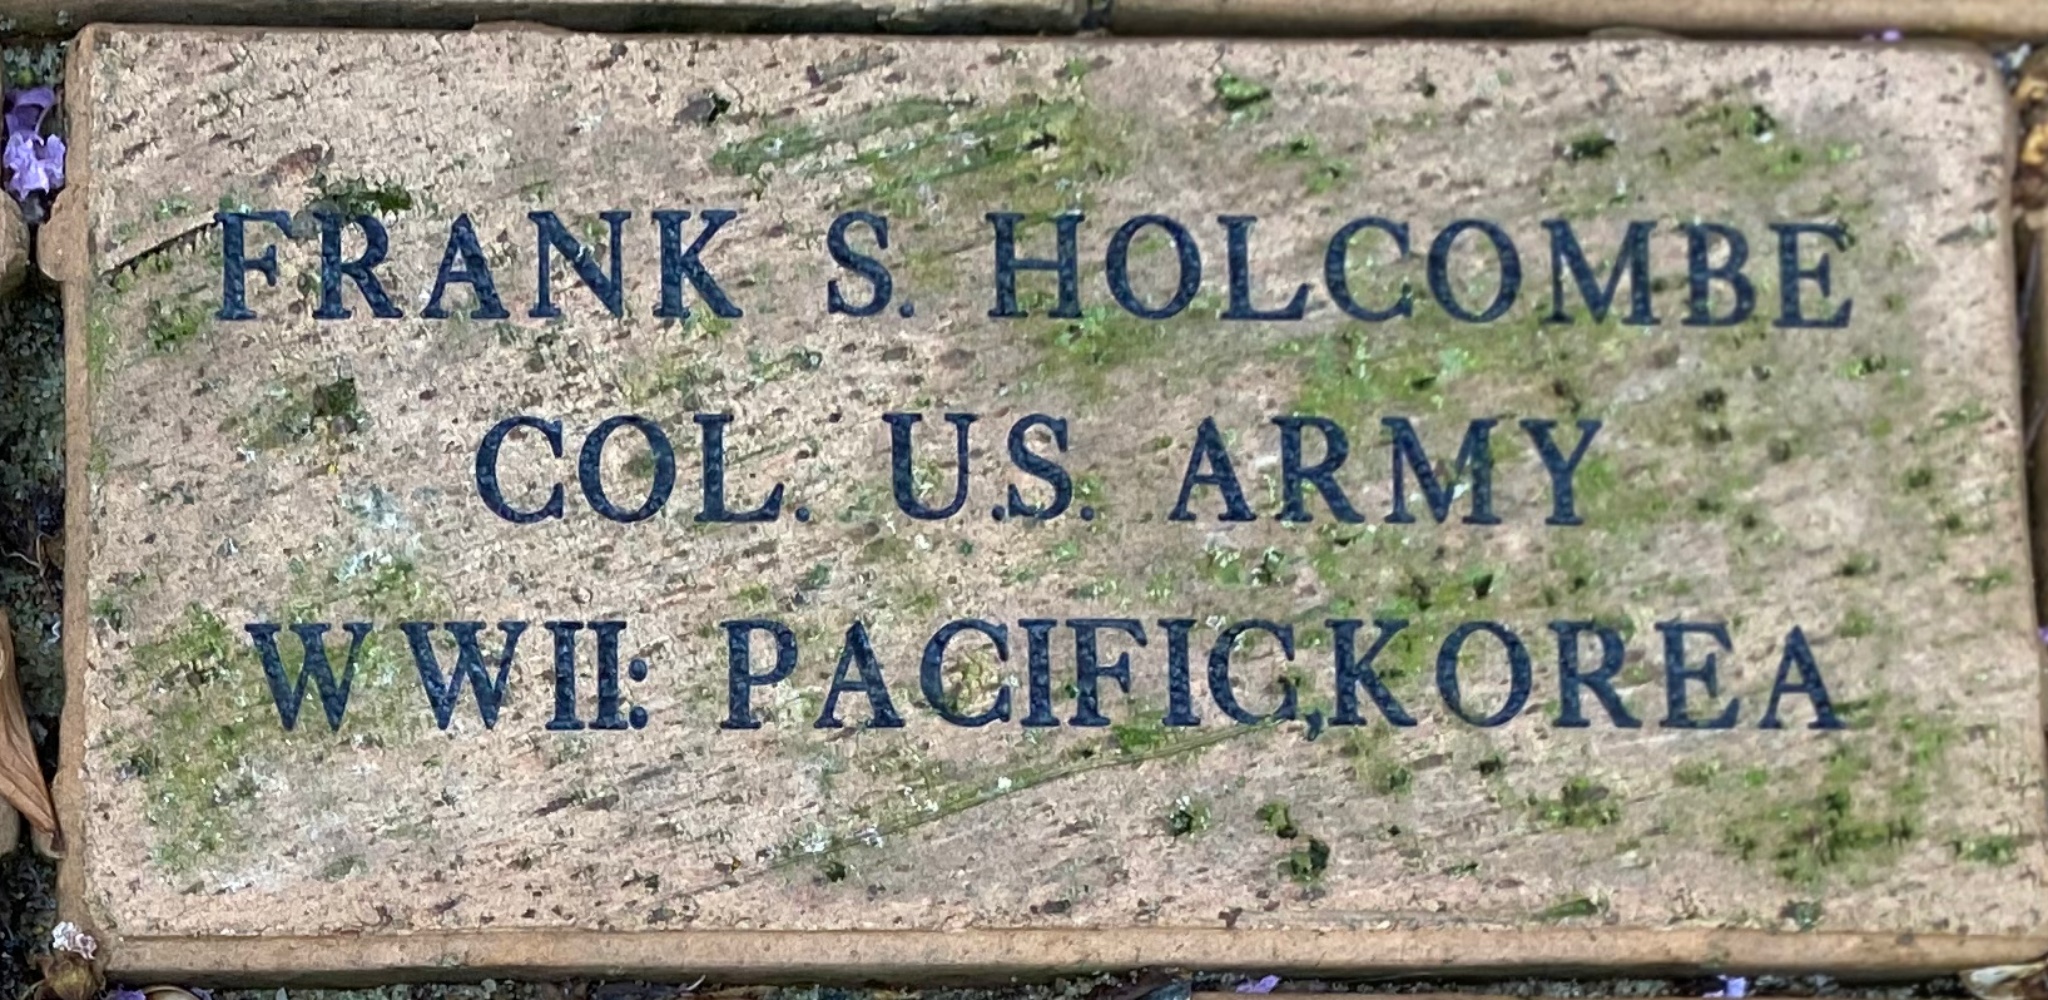 FRANK S. HOLCOMBE COL. U.S. ARMY WWII: PACIFIC KOREA